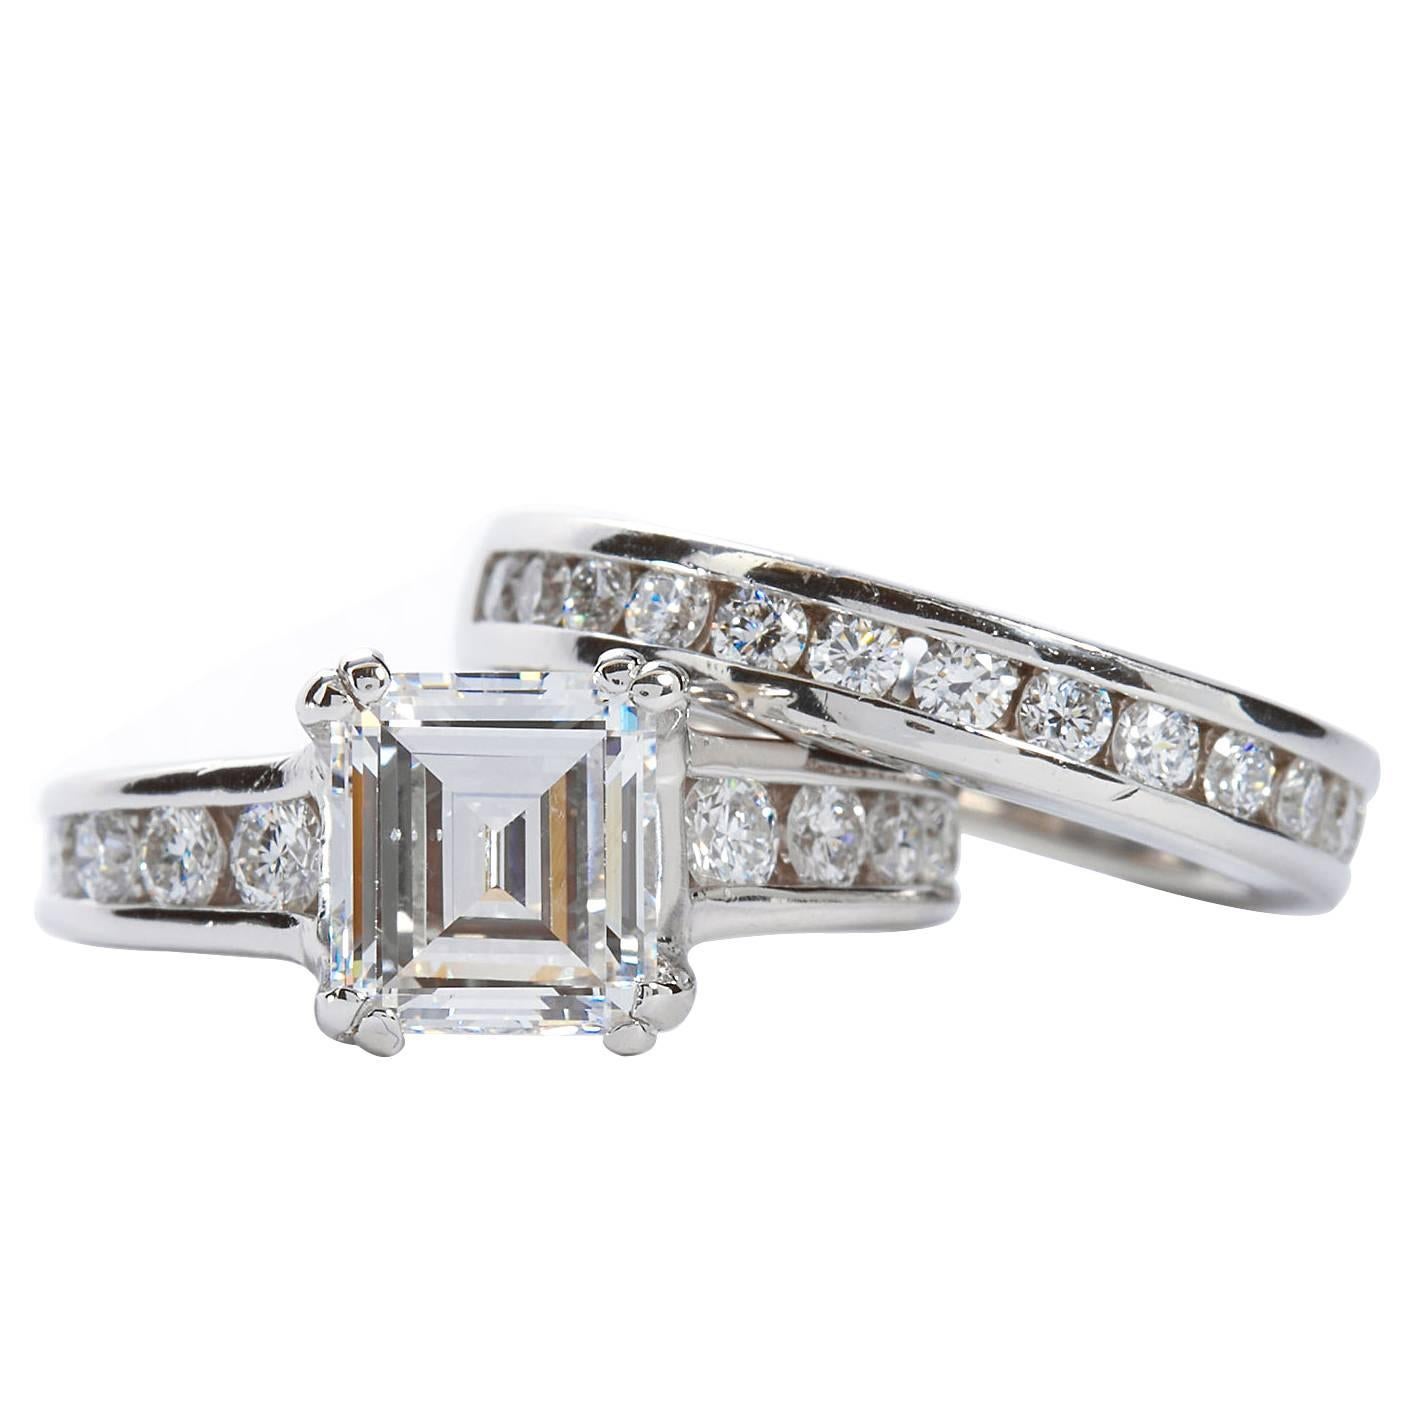 A. Jaffe 1.74 Carat Diamond Platinum Engagement Ring and Band Set